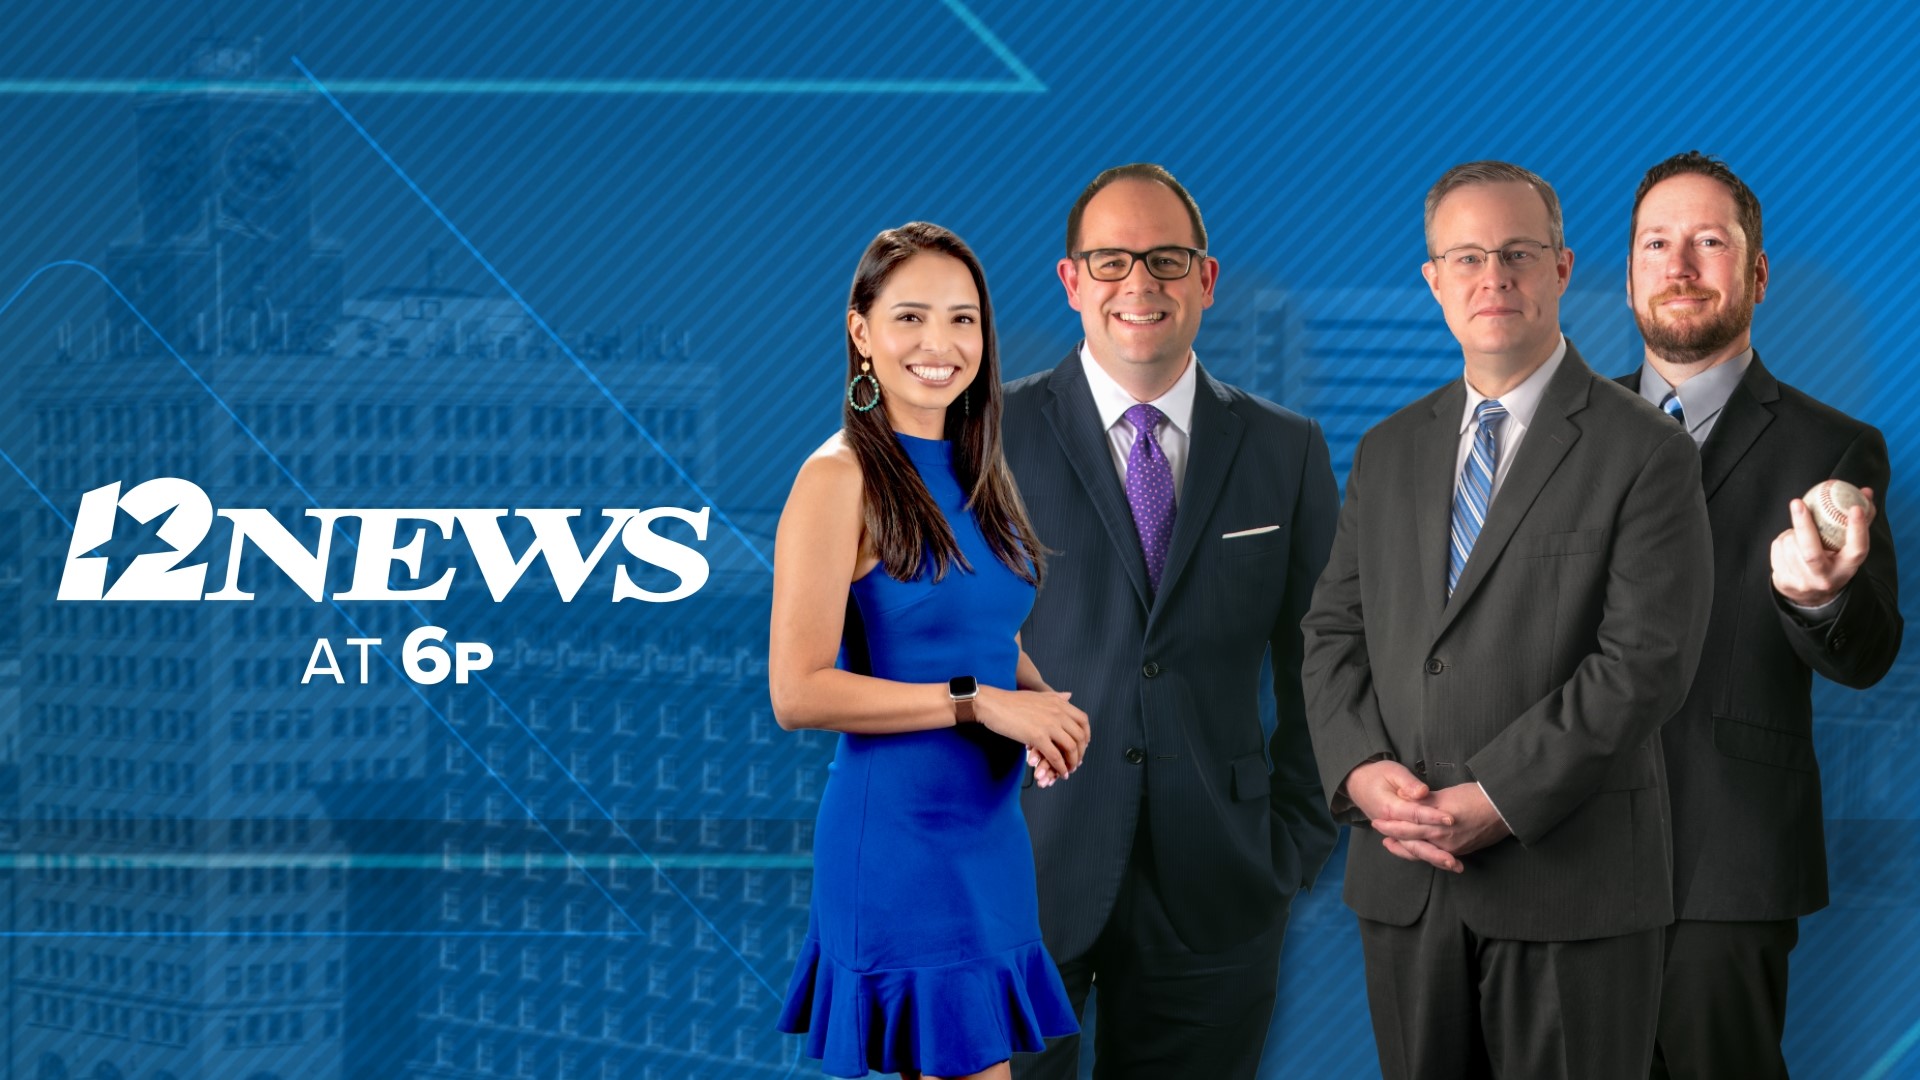 12News at 6pm - Breaking news, weather and sports Southeast Texas' top news team, Jordan Williams, Brenda Matute, Patrick Vaughn and Ashly Elam. 